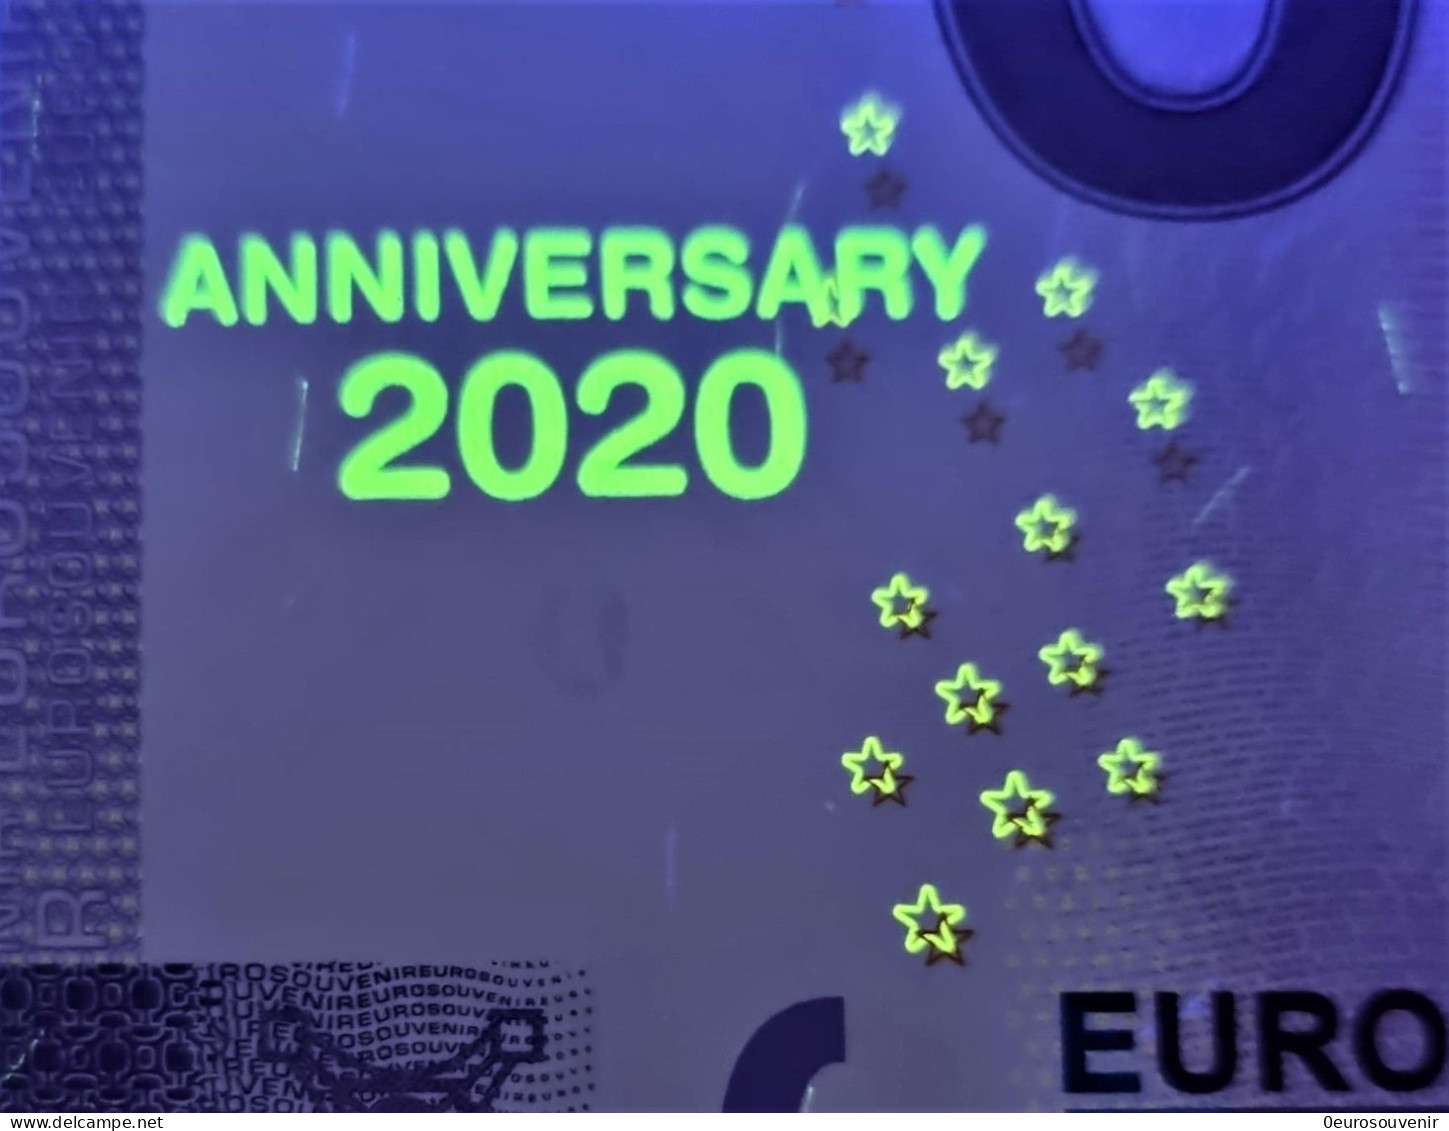 0-Euro ZEJG / XEJG 2020-13 Fehldruck SCHLOSS BURG - ANGRIFF DER SCHWEDEN Set NORMAL+ANNIVERSARY - Private Proofs / Unofficial